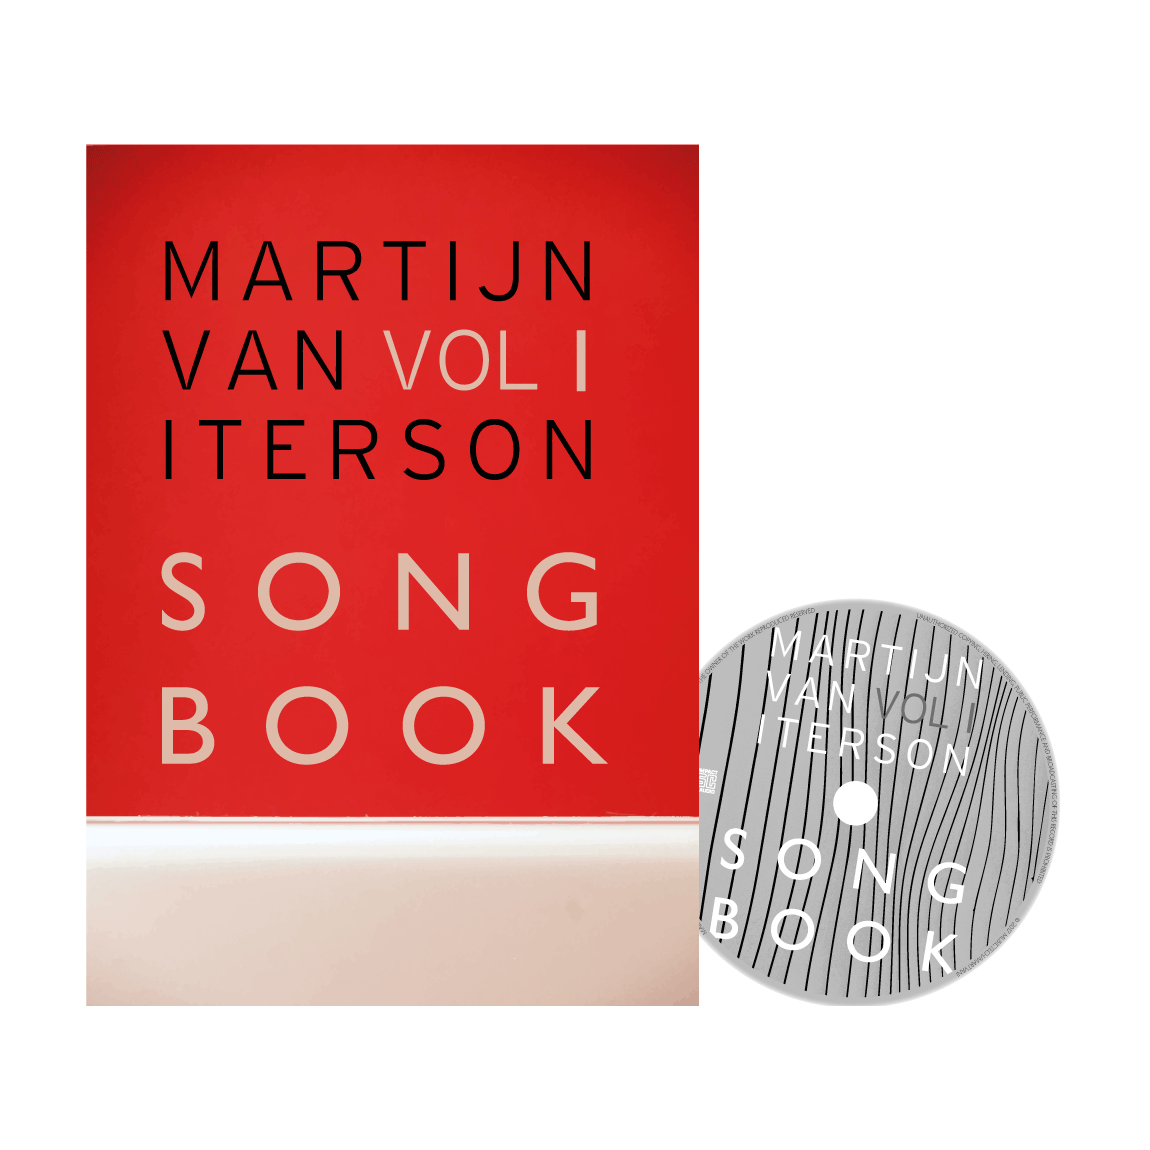 Martijn van Iterson Songbook Vol 1  (2018 hardcover edition, CD included, €49,95)